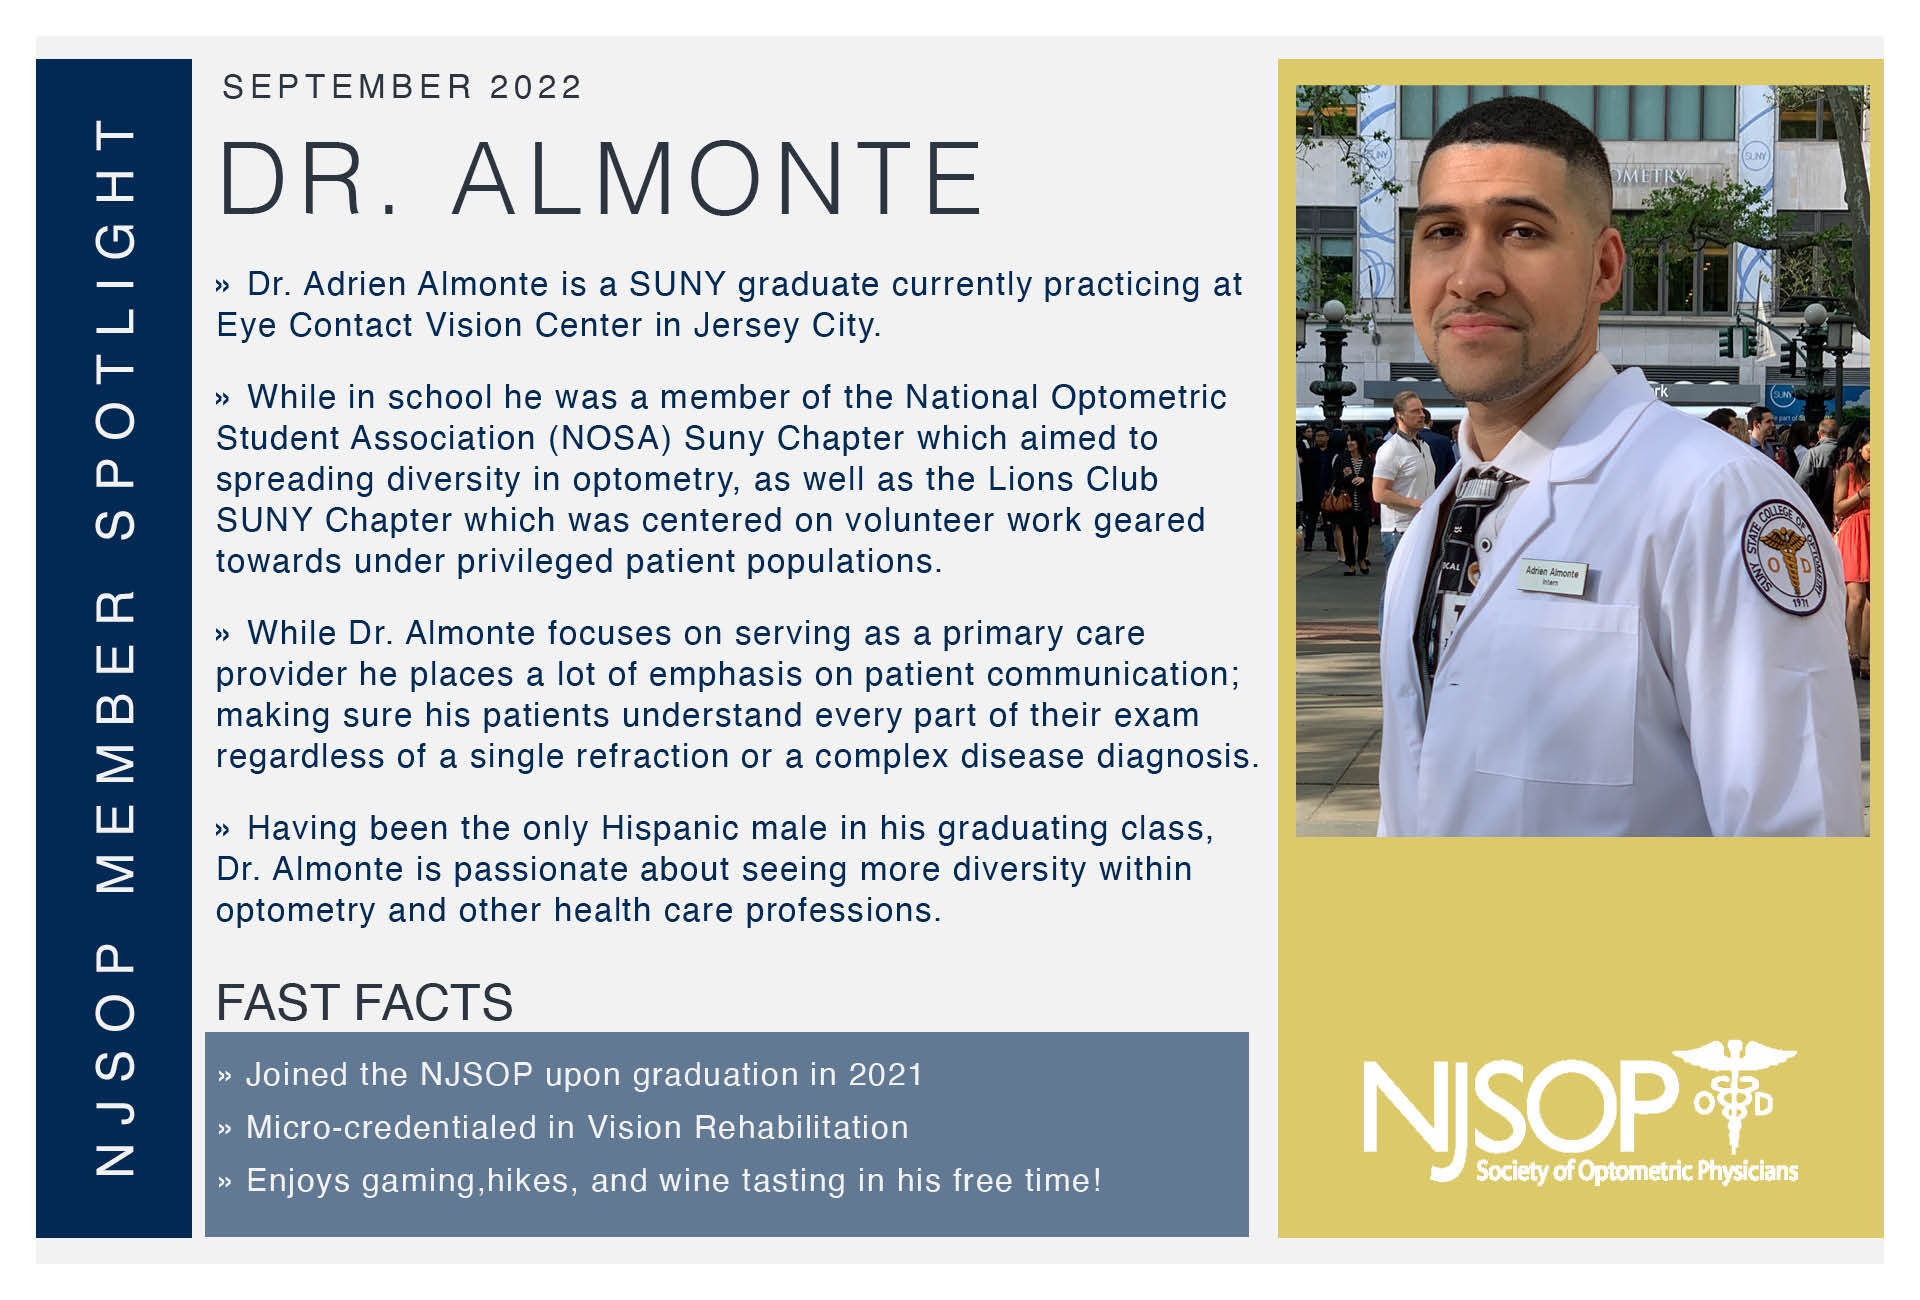 Dr. Almonte